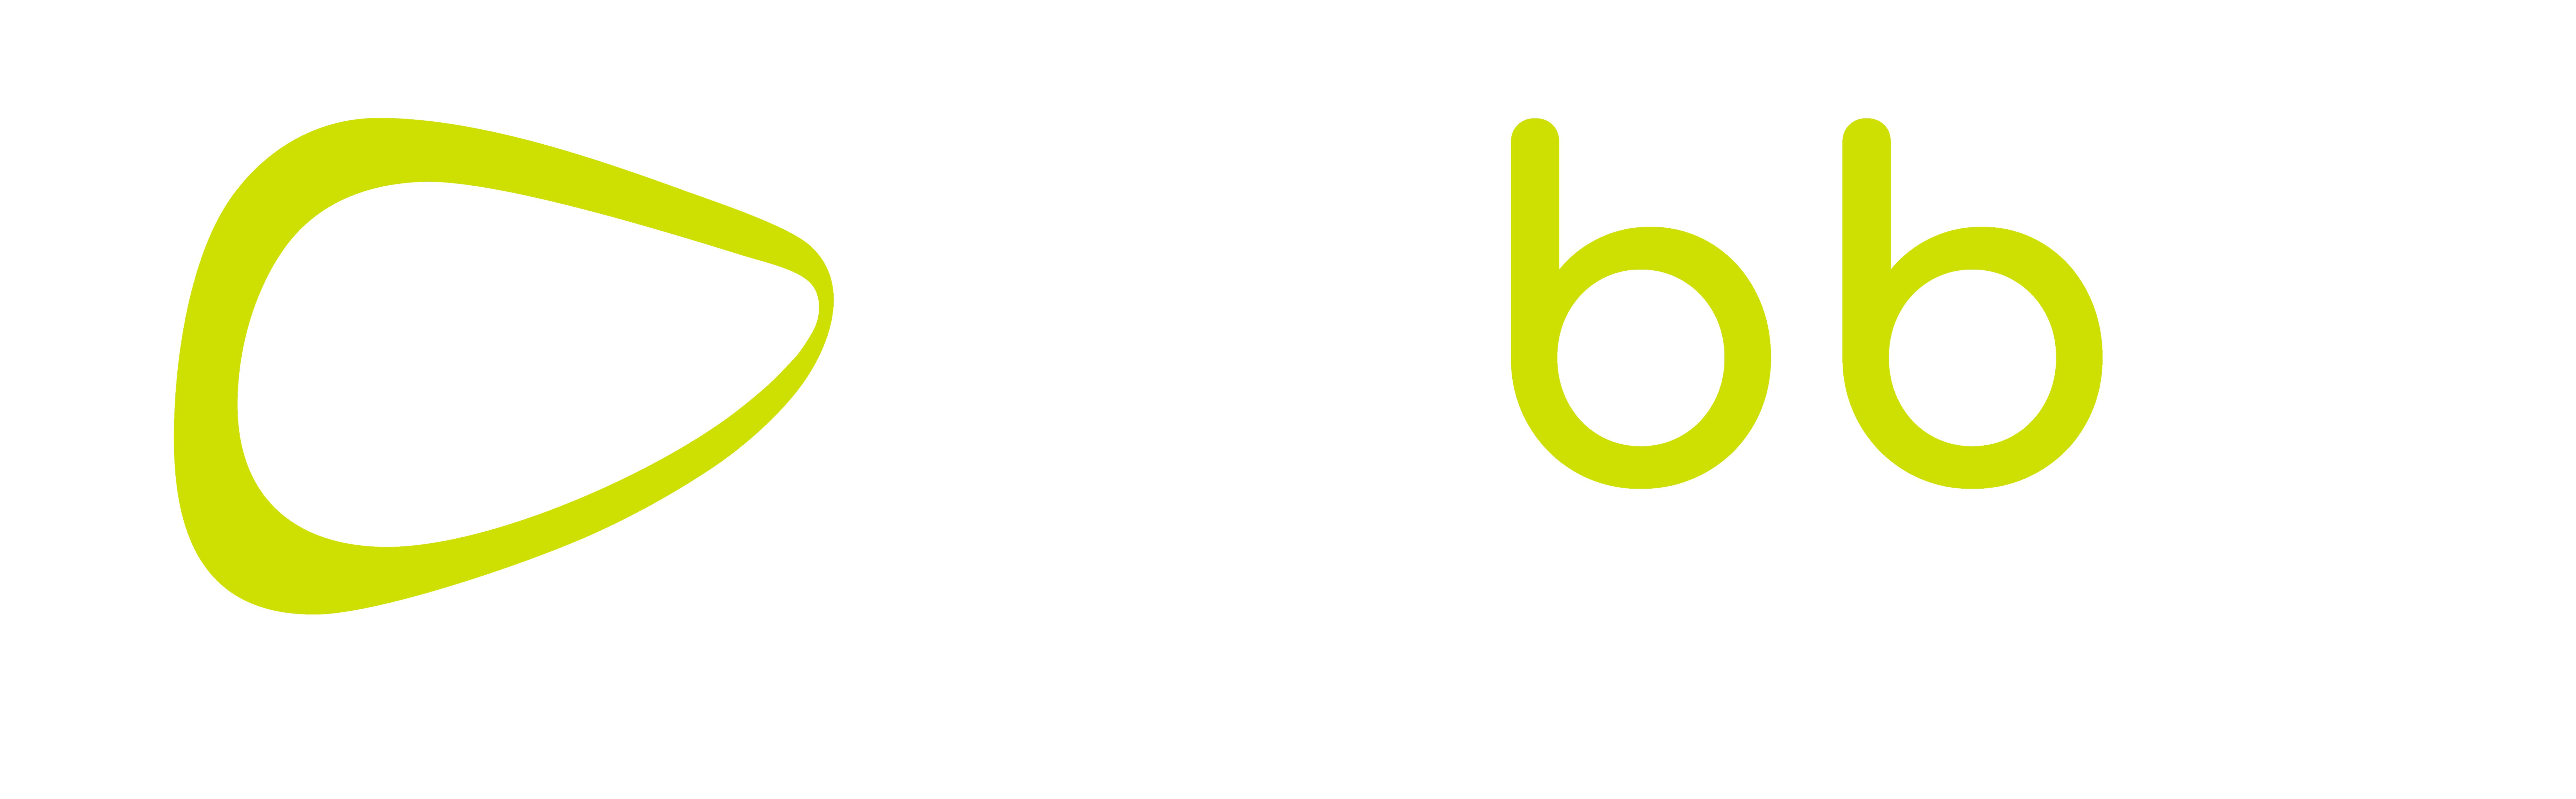 Pebble Softwares